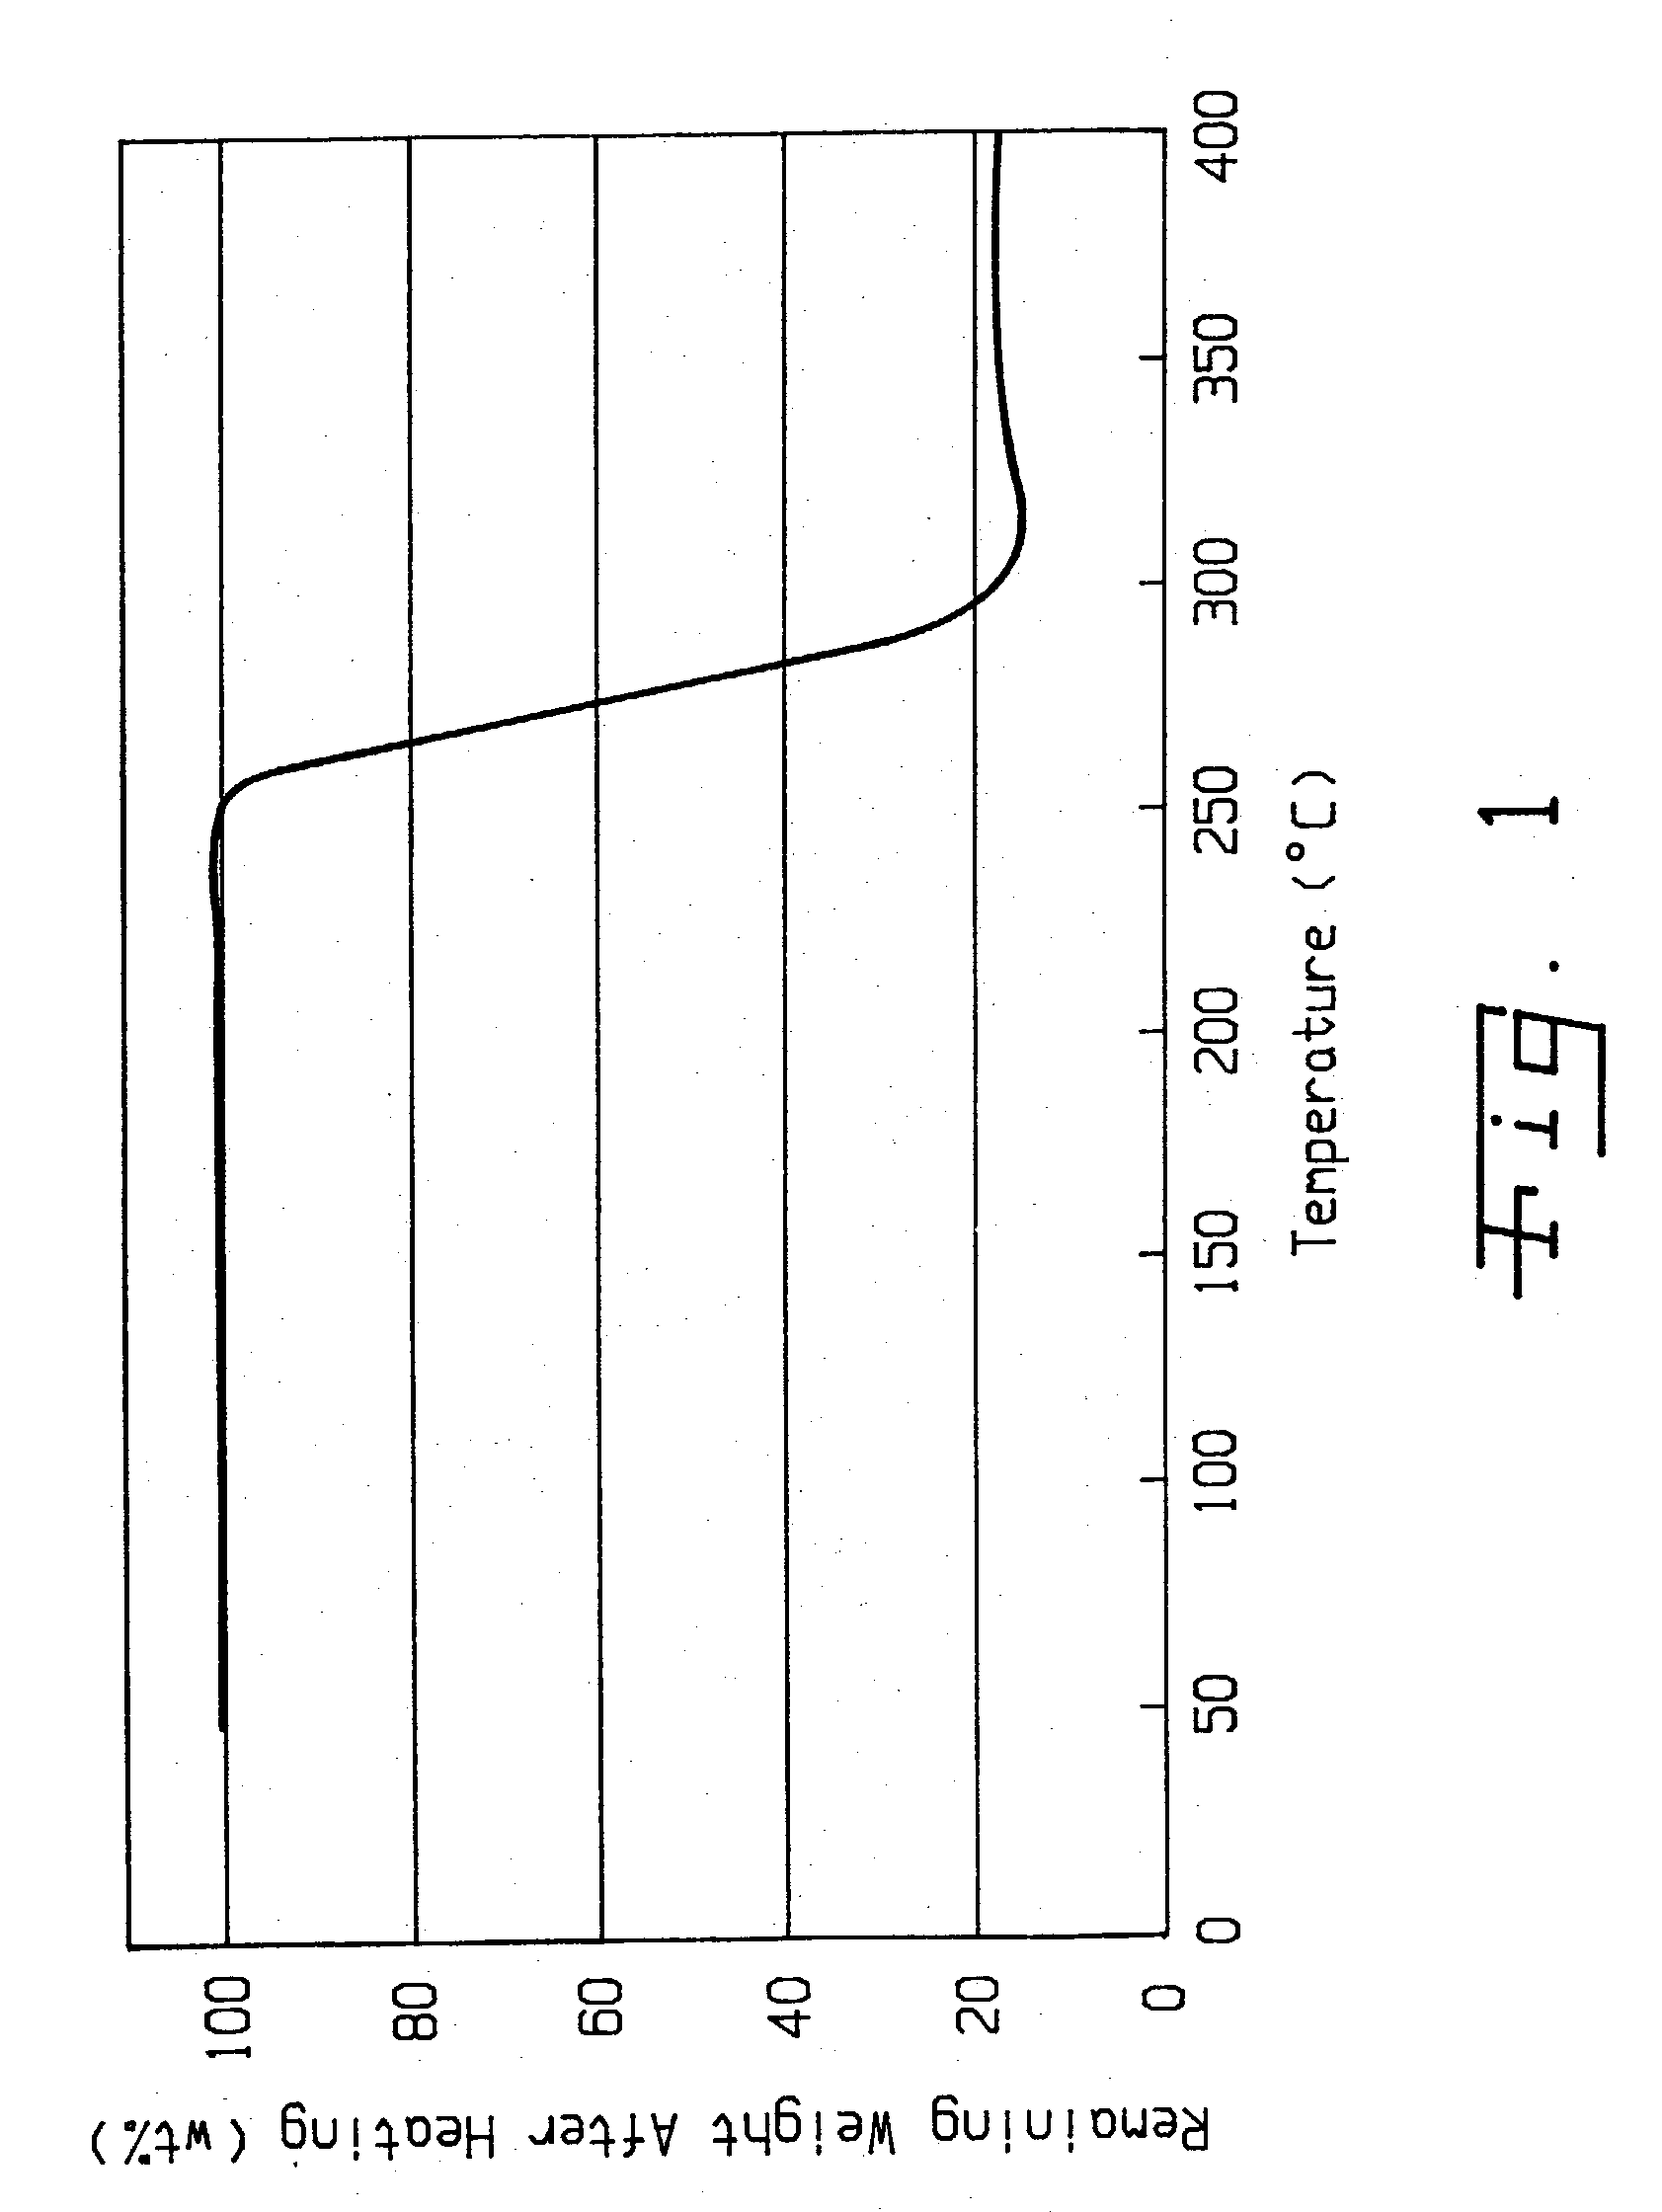 Method of purifying lithium hexafluorosphate